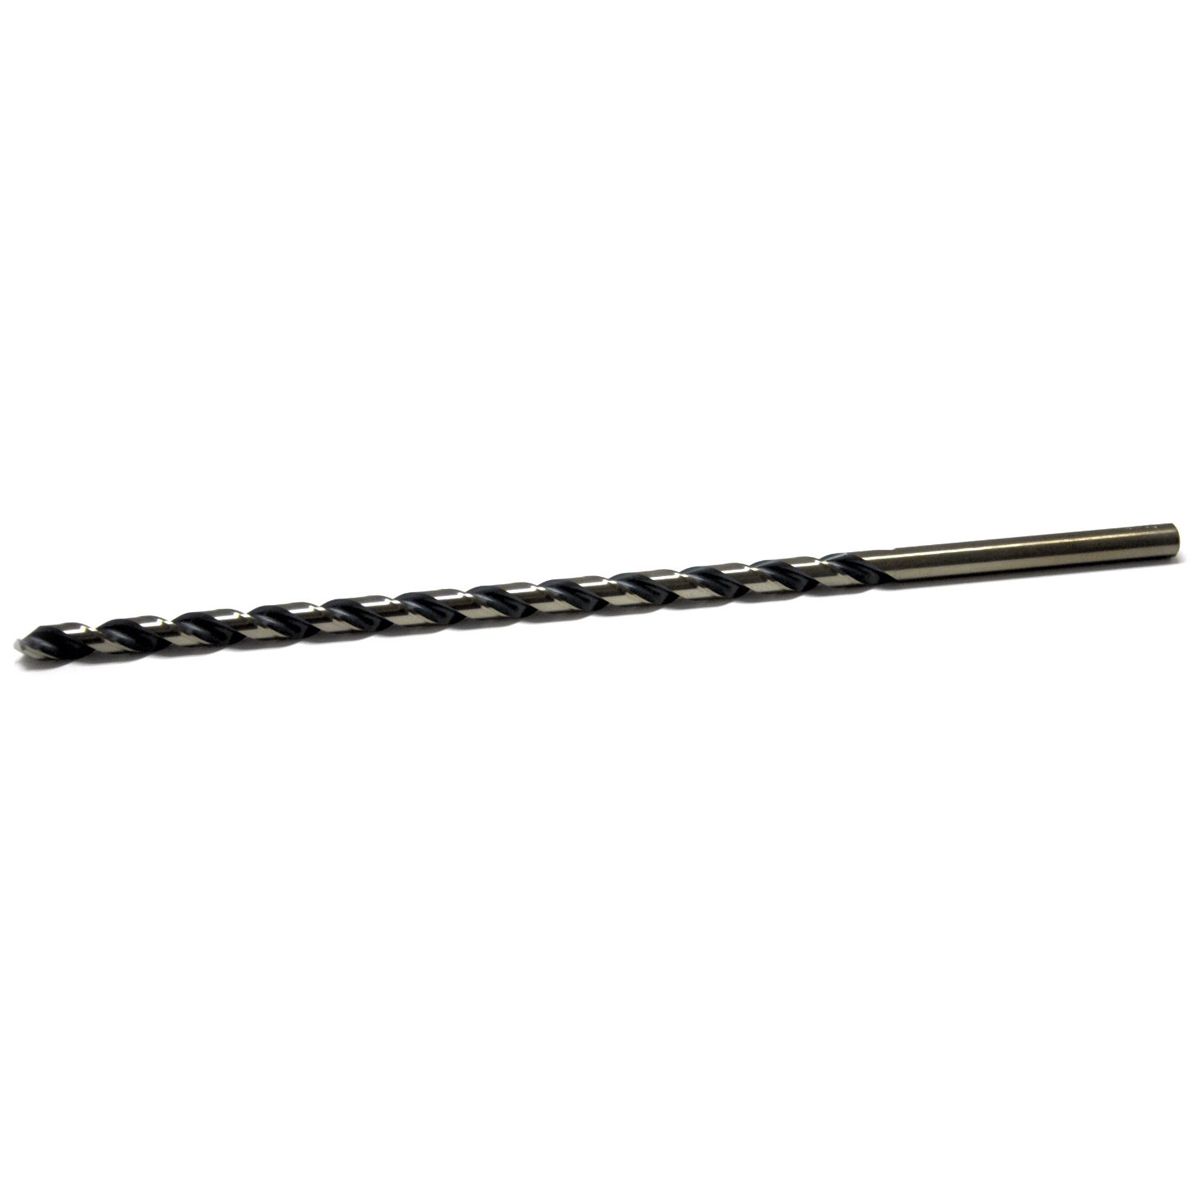 1.5000 Flute Length Oxide Finish I RD44509 RedLine Tools Mechanics Length Drill Bit Pack of 6 2.6875 OAL .2720 